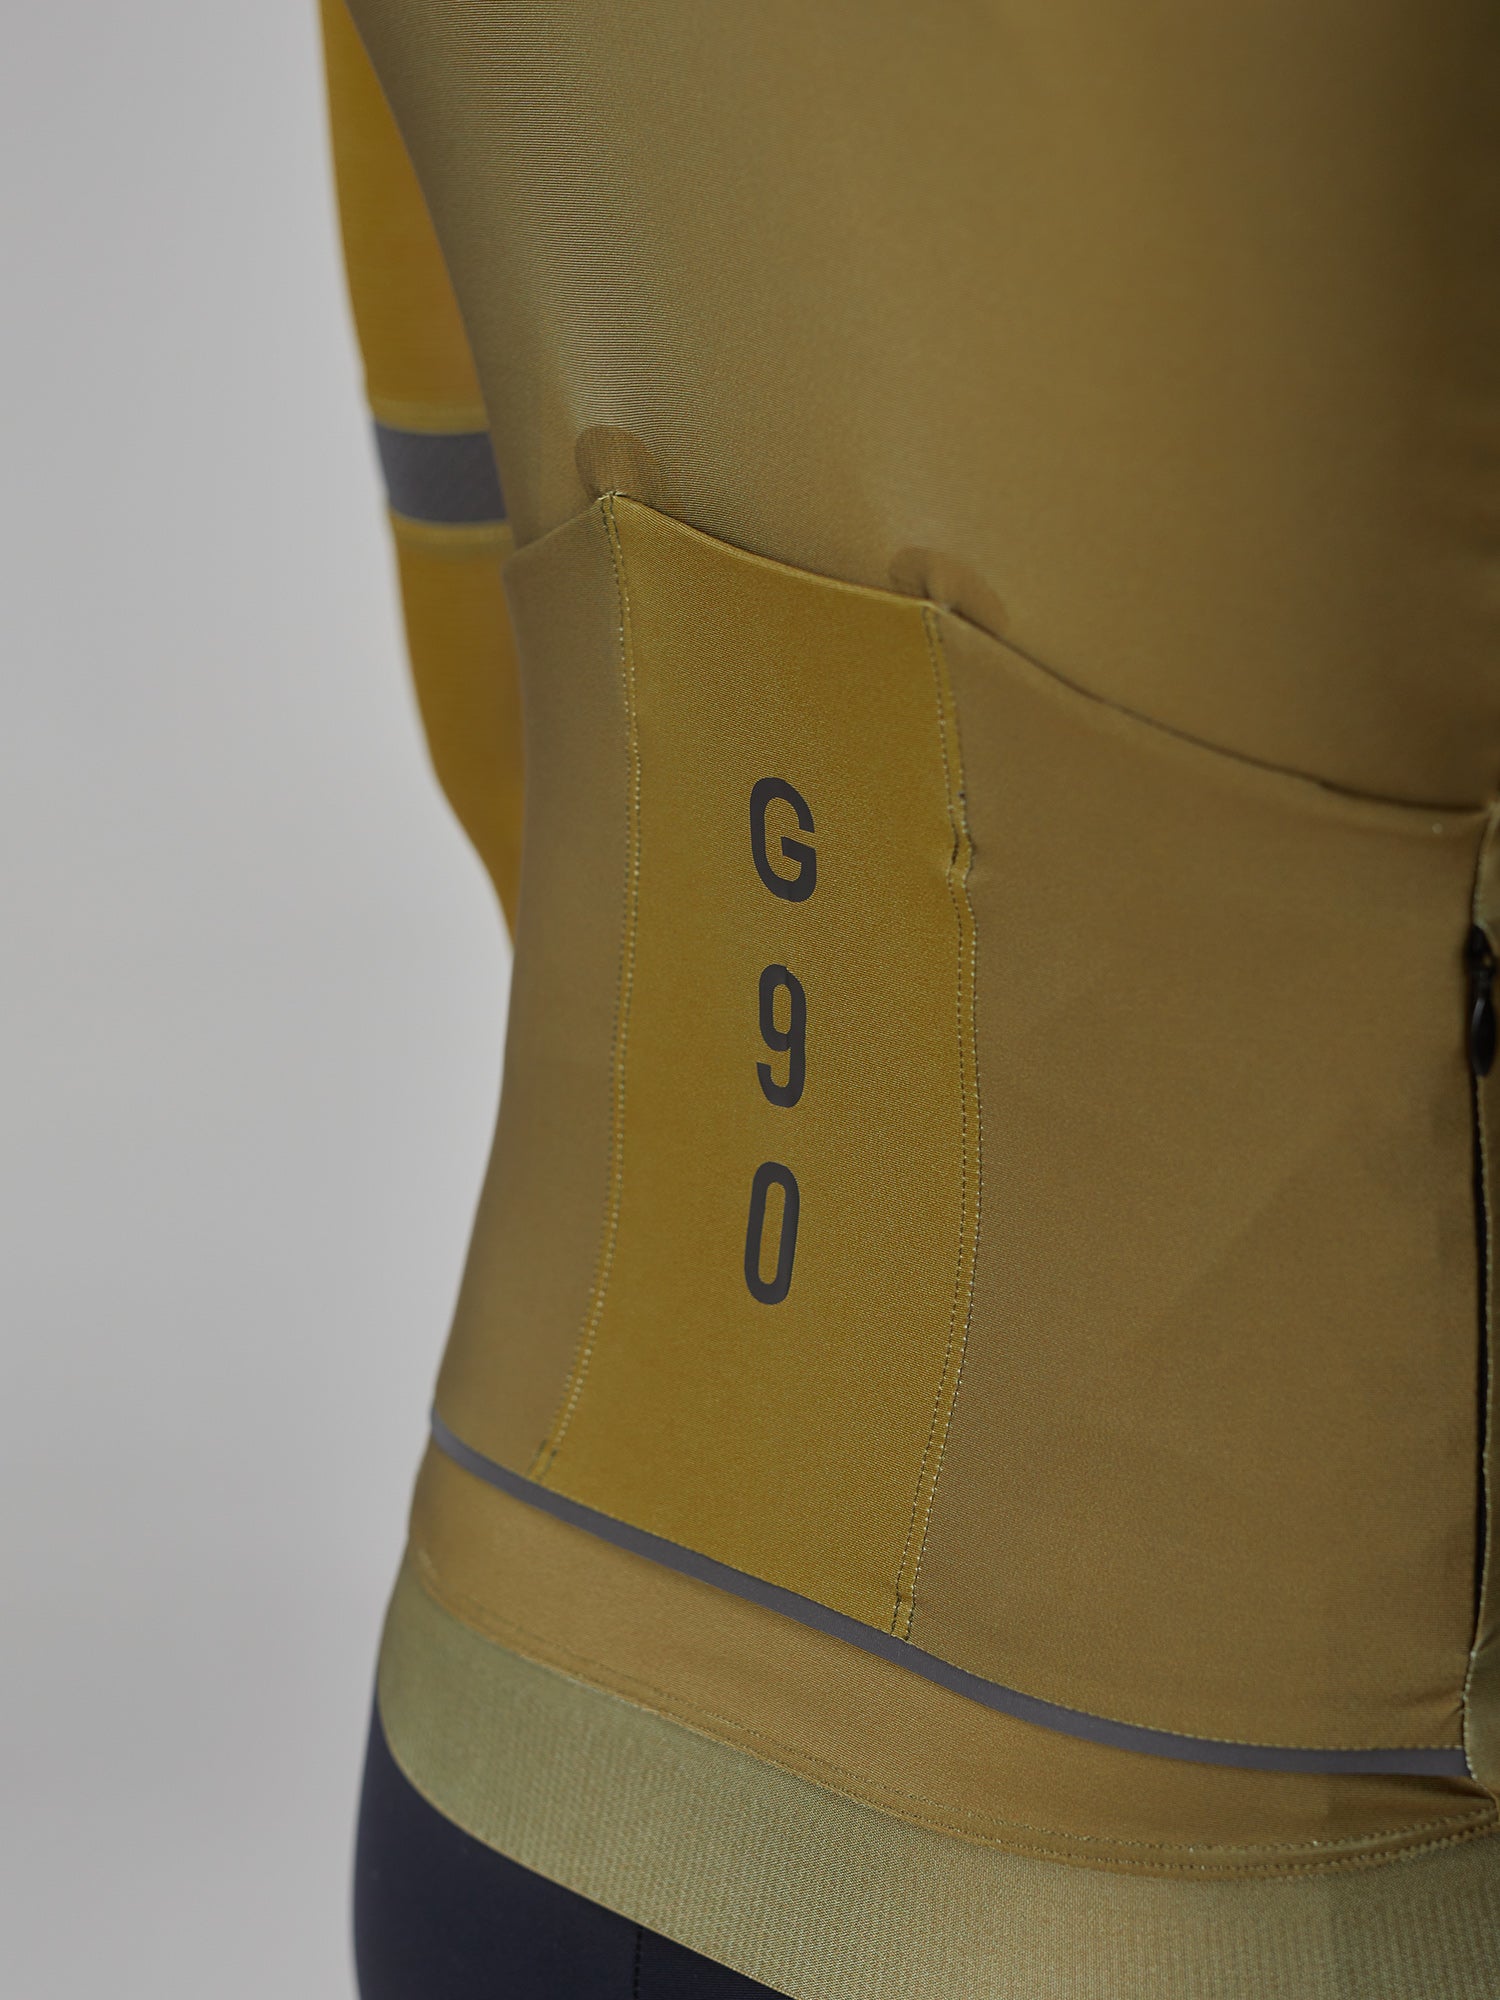 G90 Long Sleeve Jersey